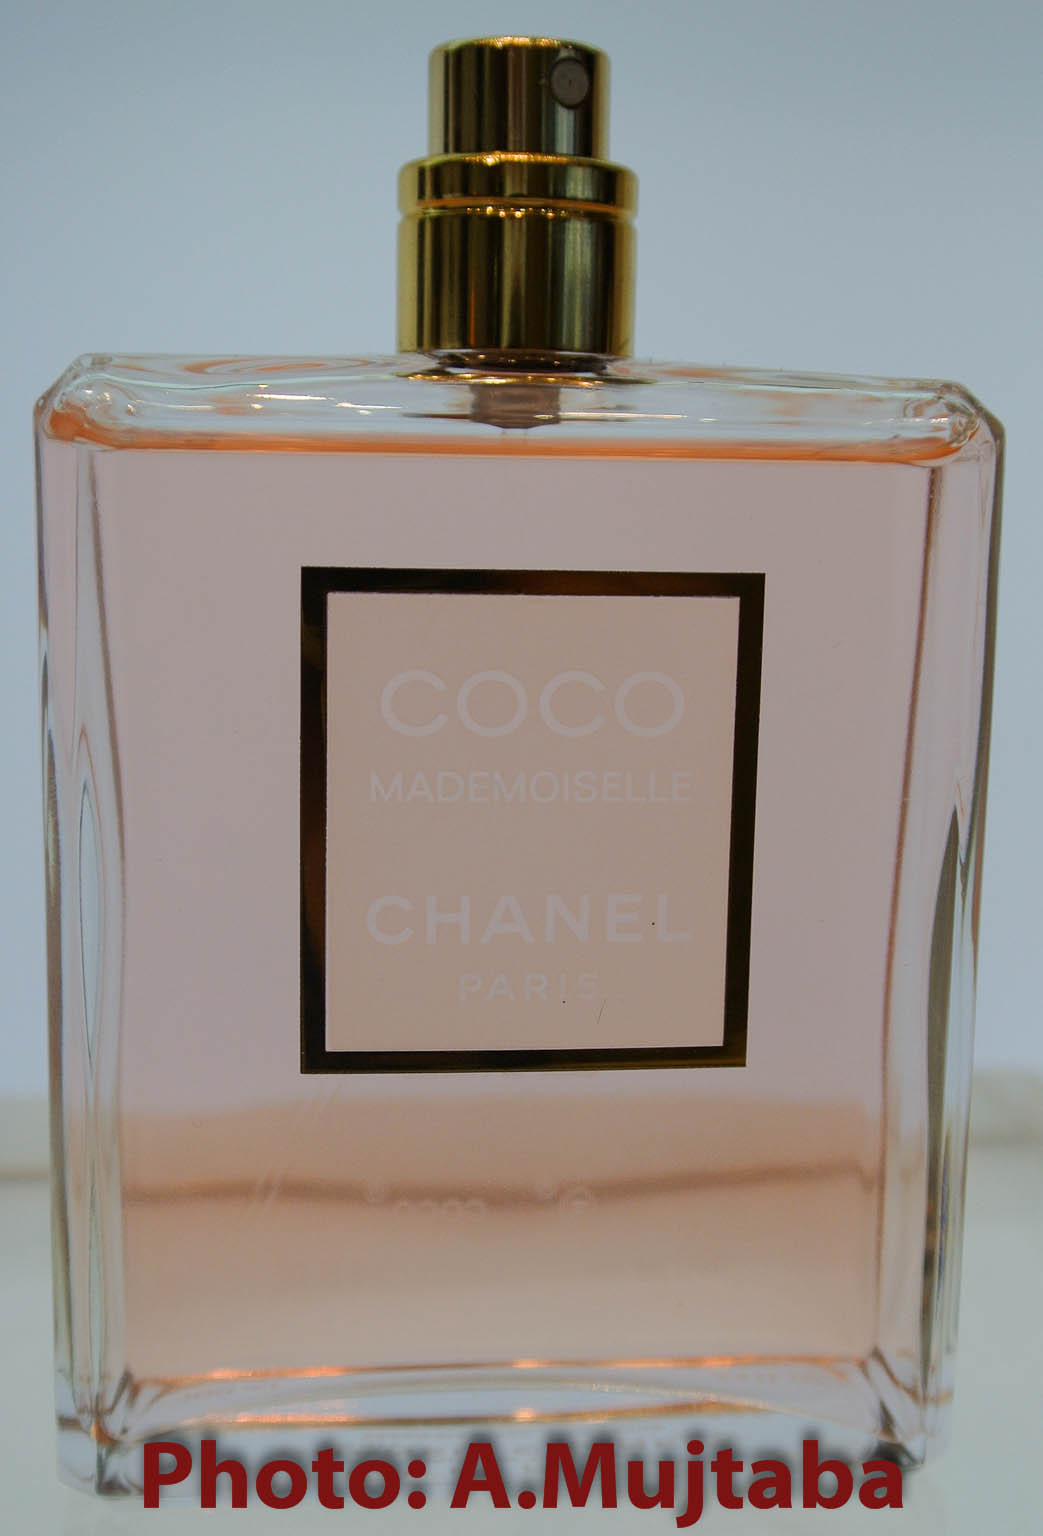 coco chanel perfume smell like